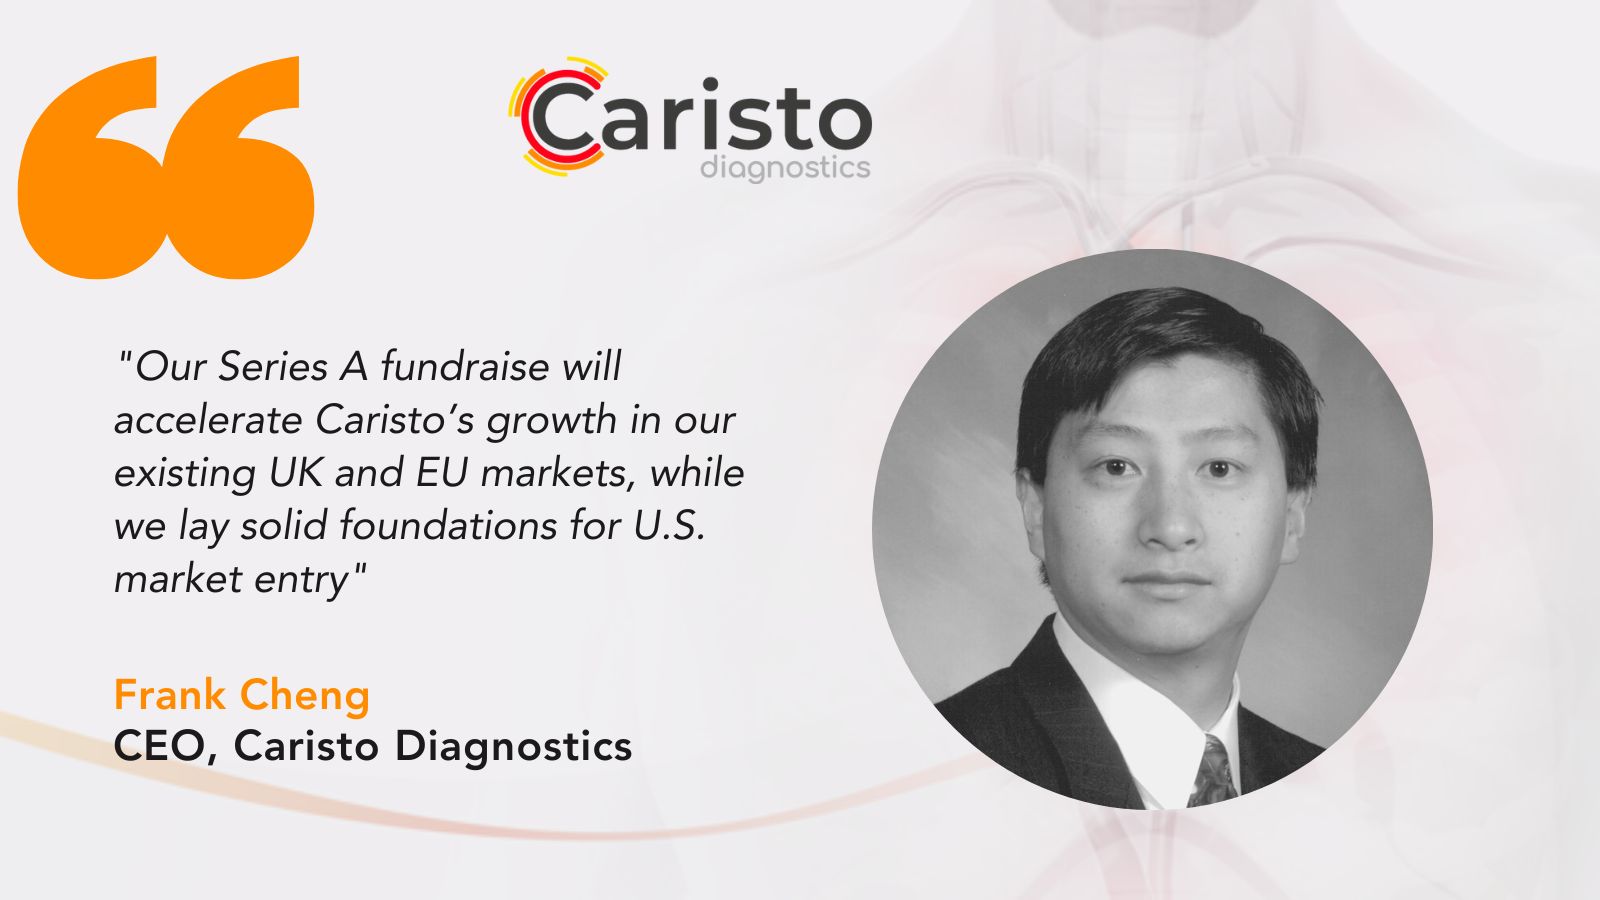 Quote by Frank Cheng, CEO, Caristo Diagnostics